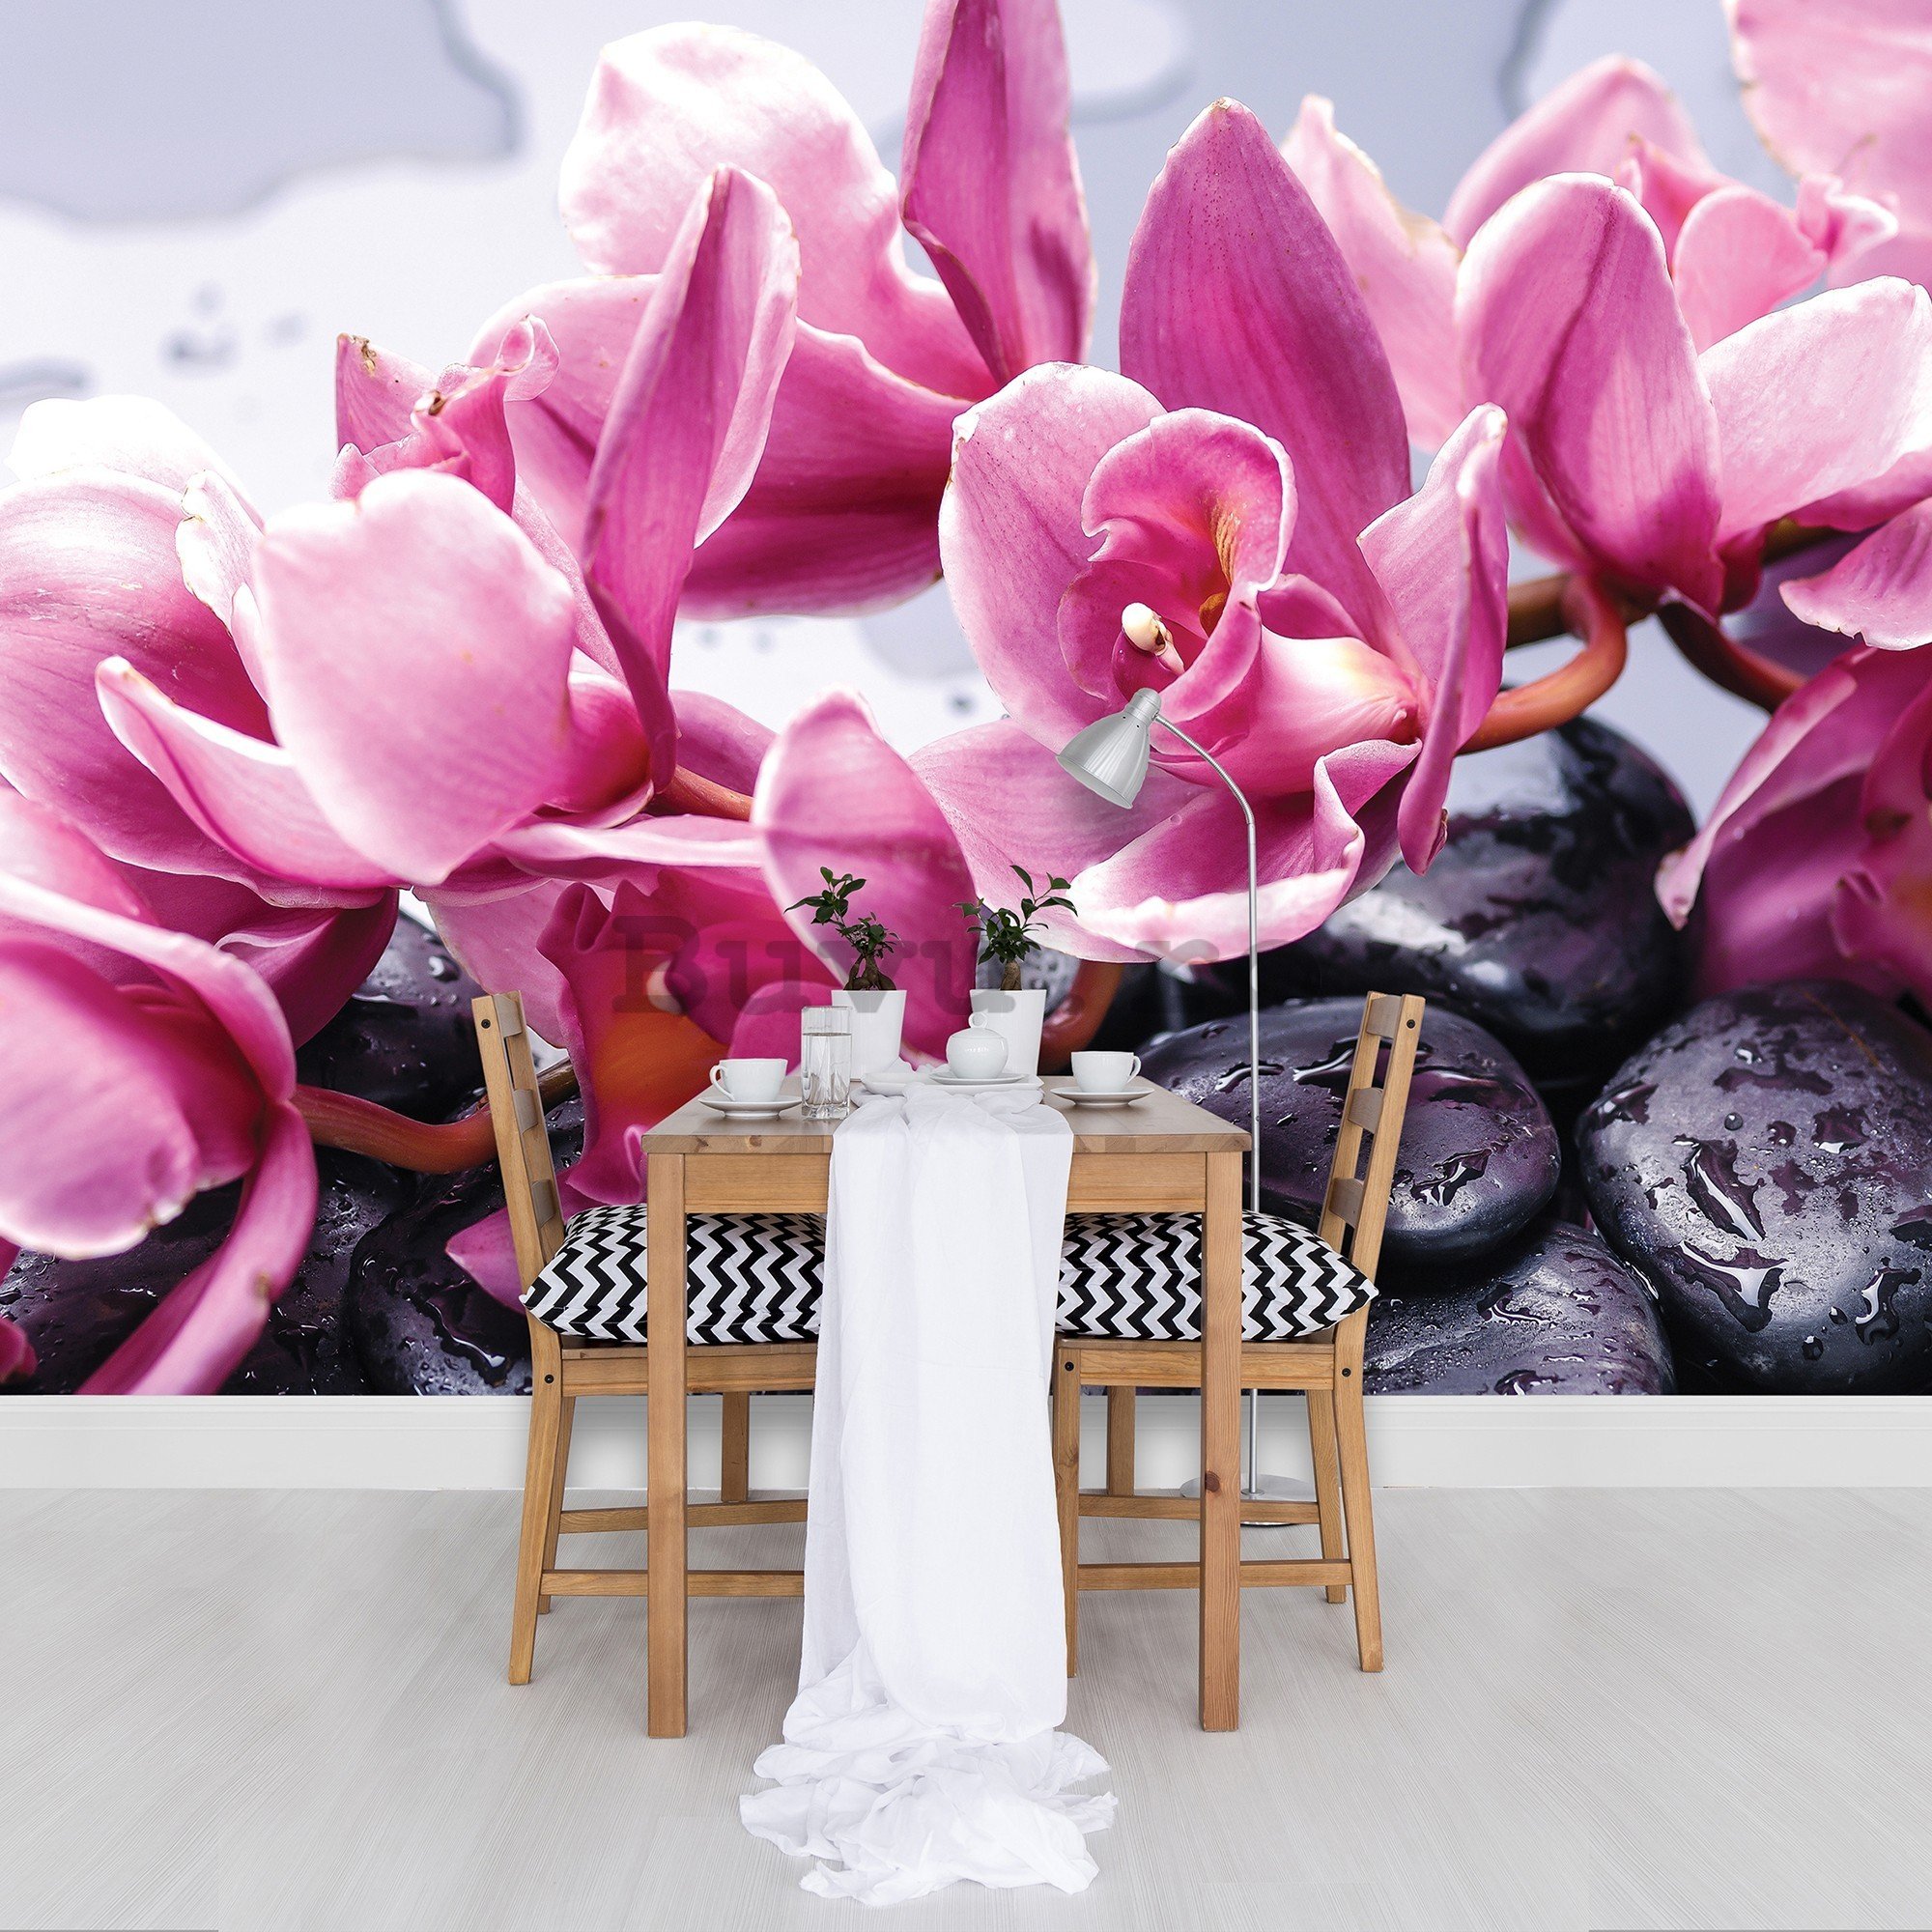 Fototapet vlies: Pietre balneare și orhideea roz - 416x254 cm